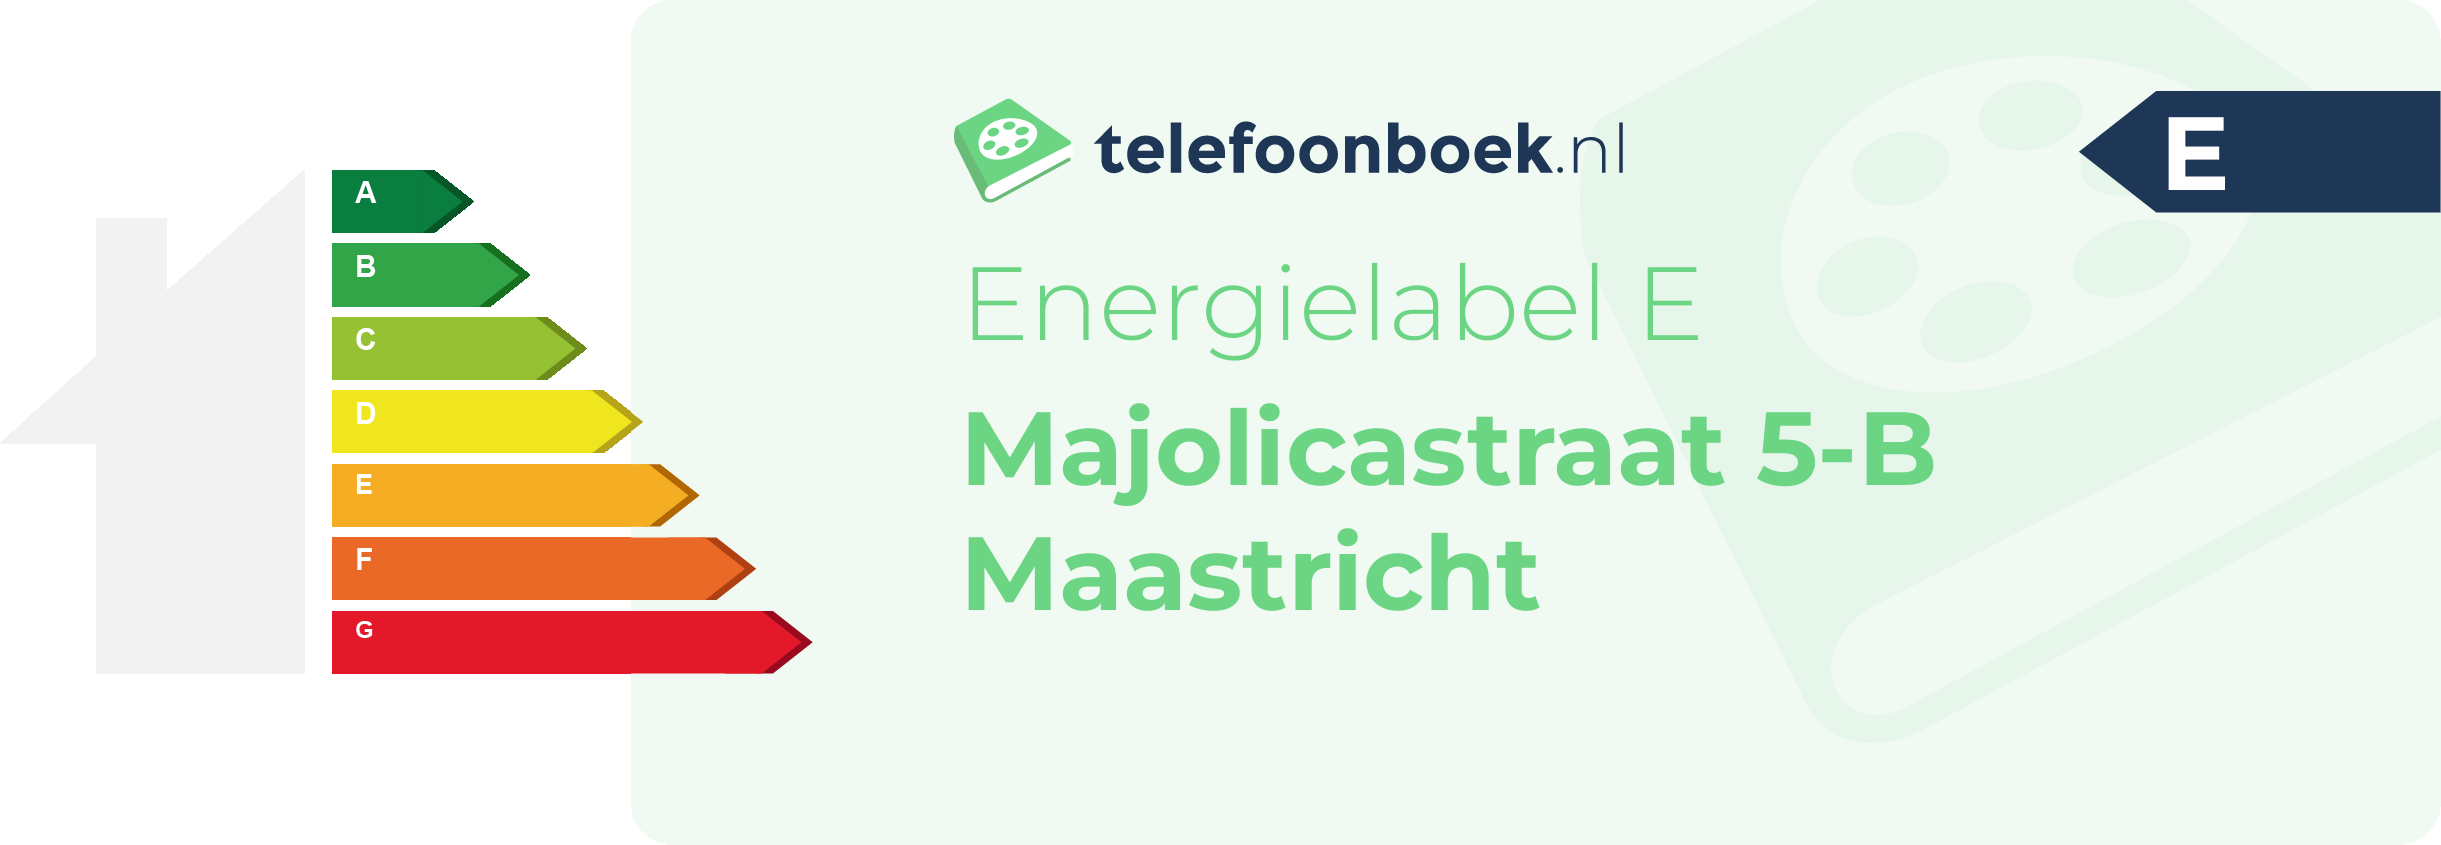 Energielabel Majolicastraat 5-B Maastricht